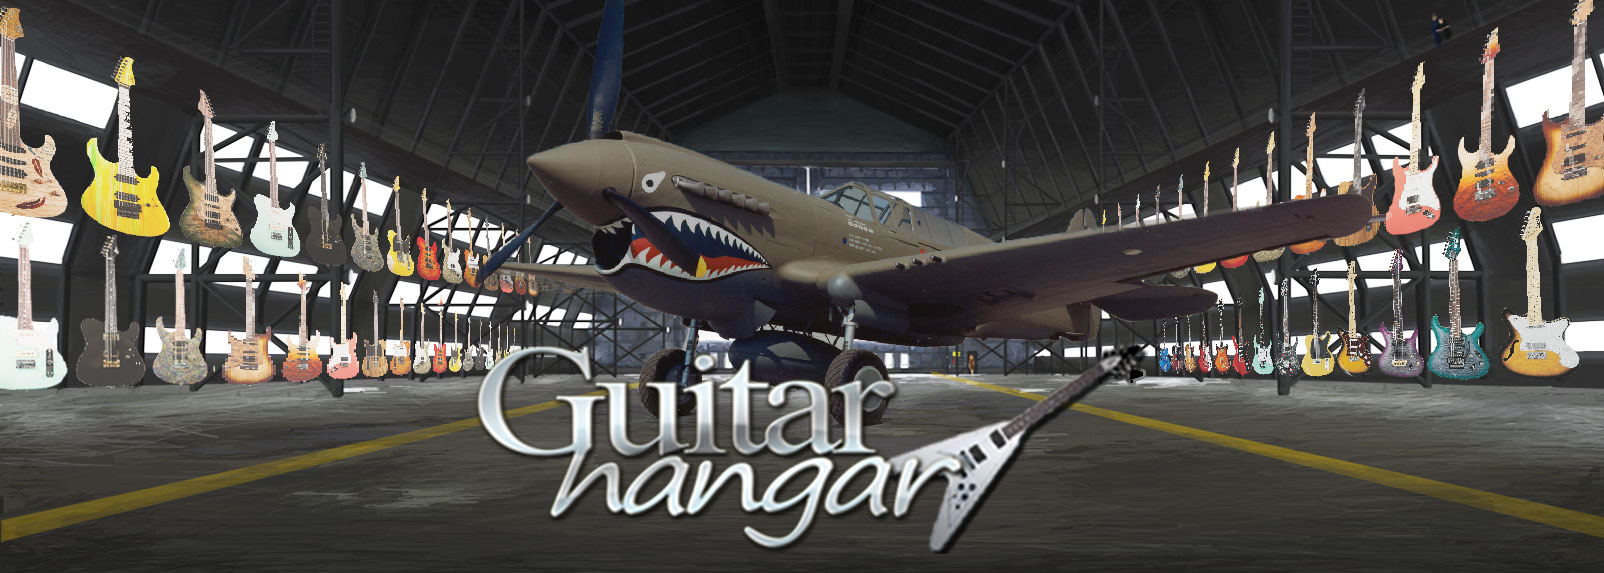 guitar-hangar-header-20221